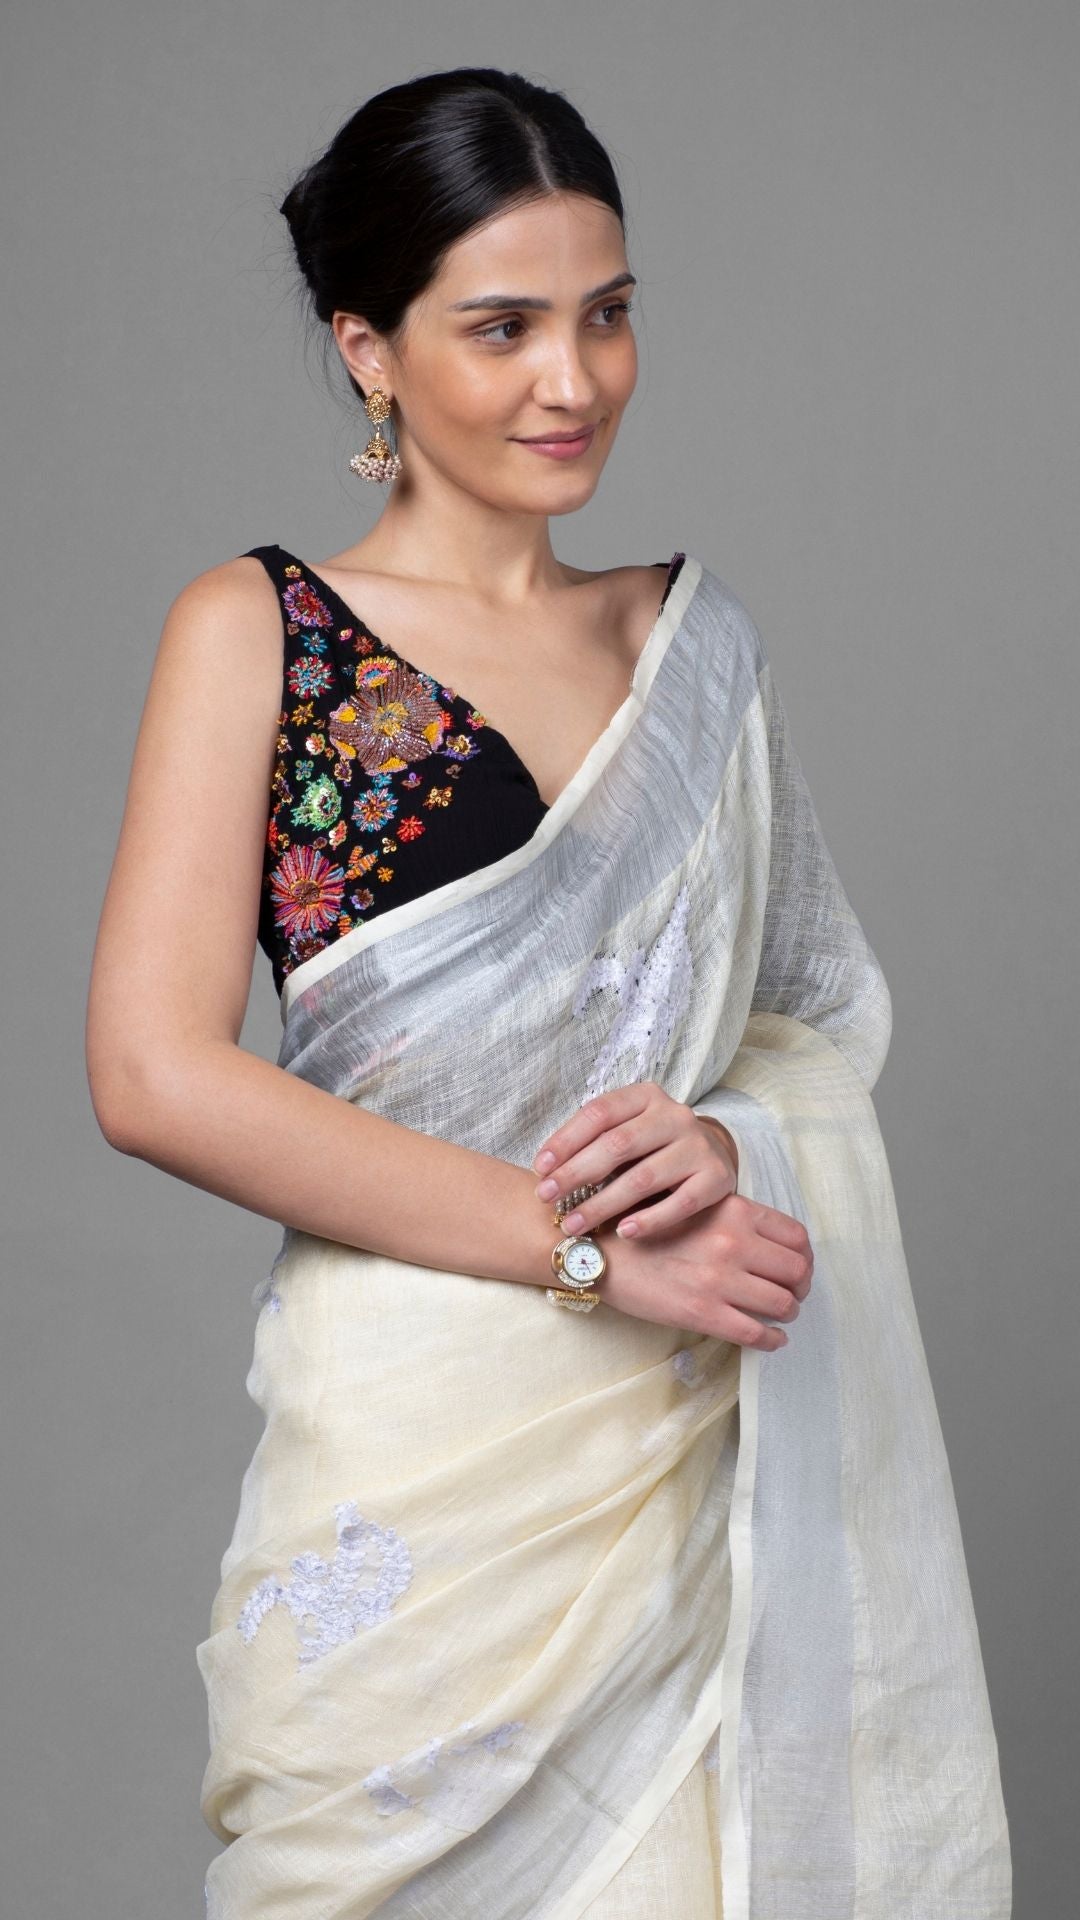 Vivid Pure Linen Embroidered Handloom Off White Saree